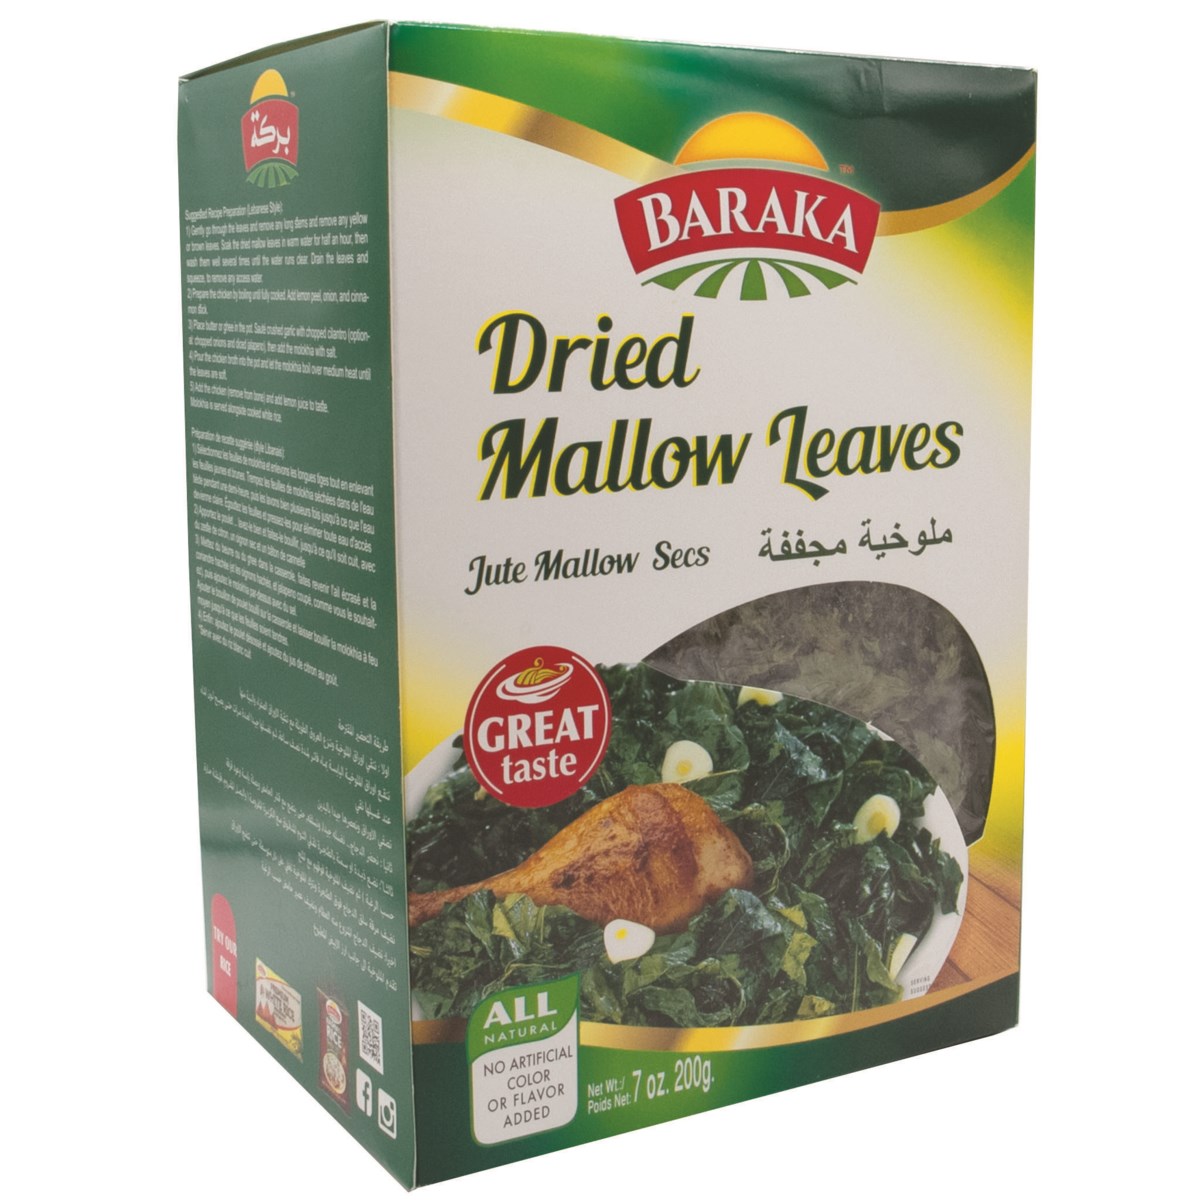 Dry Mallow leaves "Baraka" 200g x 8